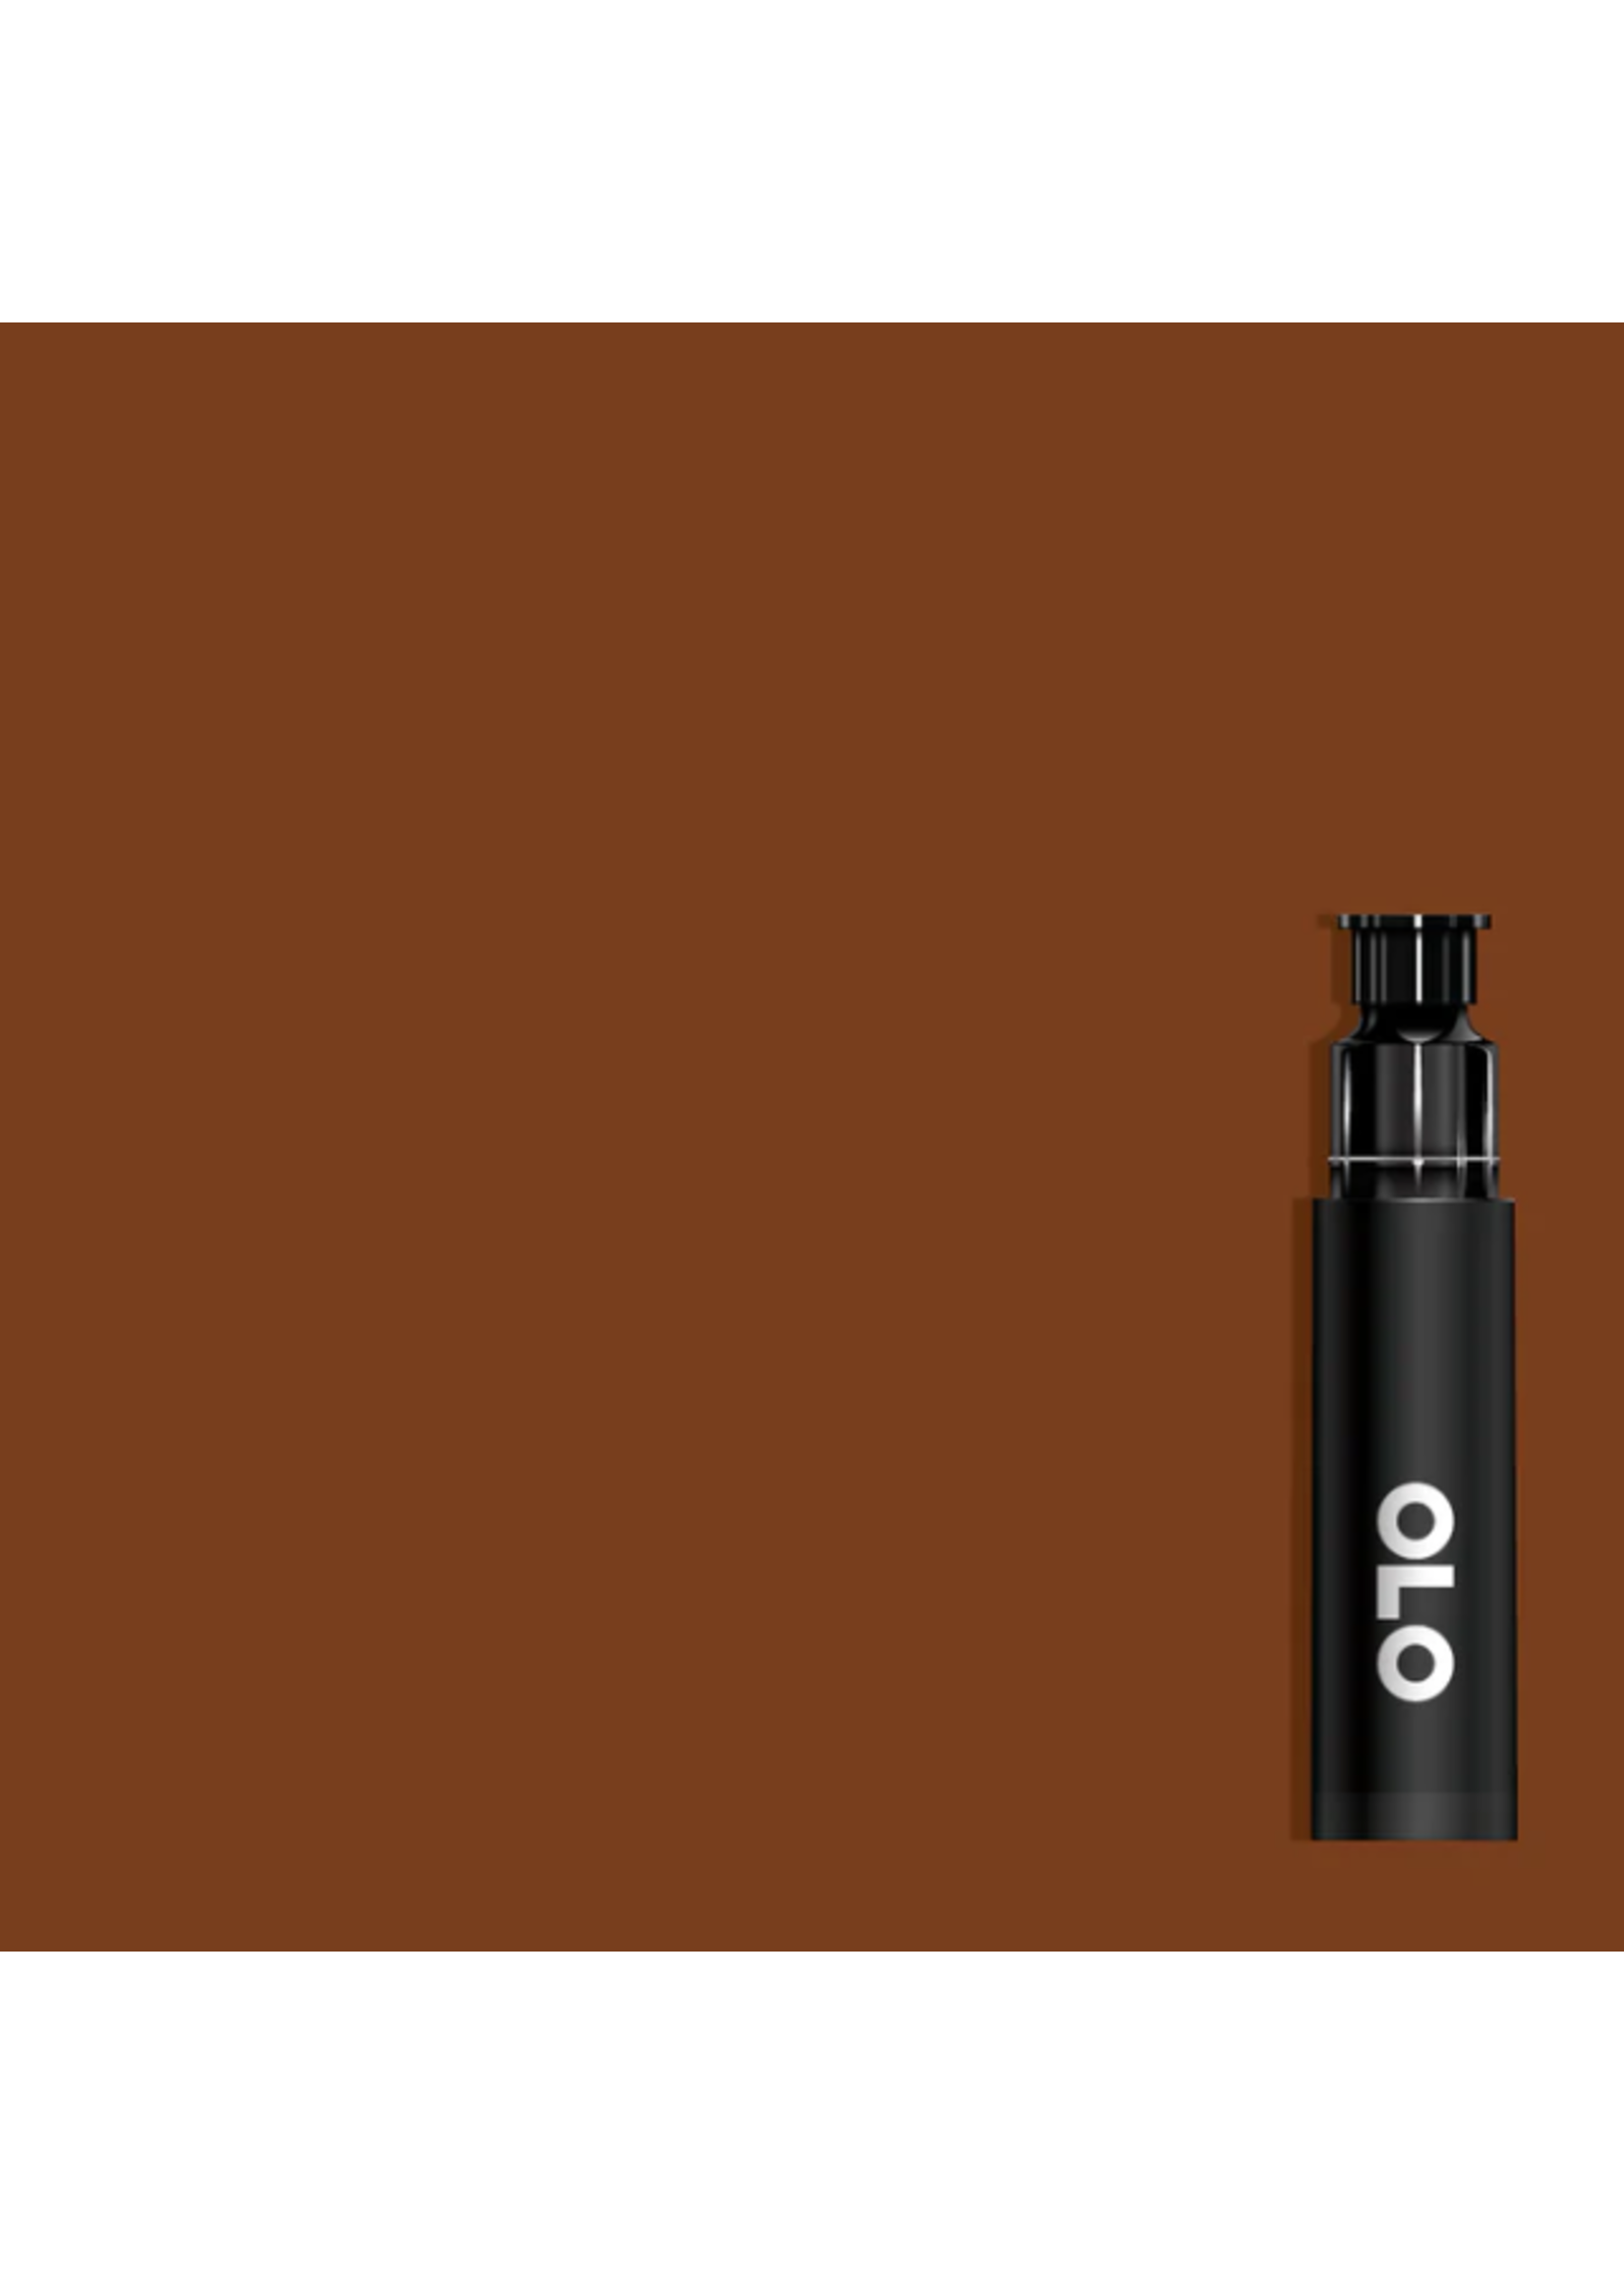 OLO OLO Brush Replacement Cartridge: Cinnamon